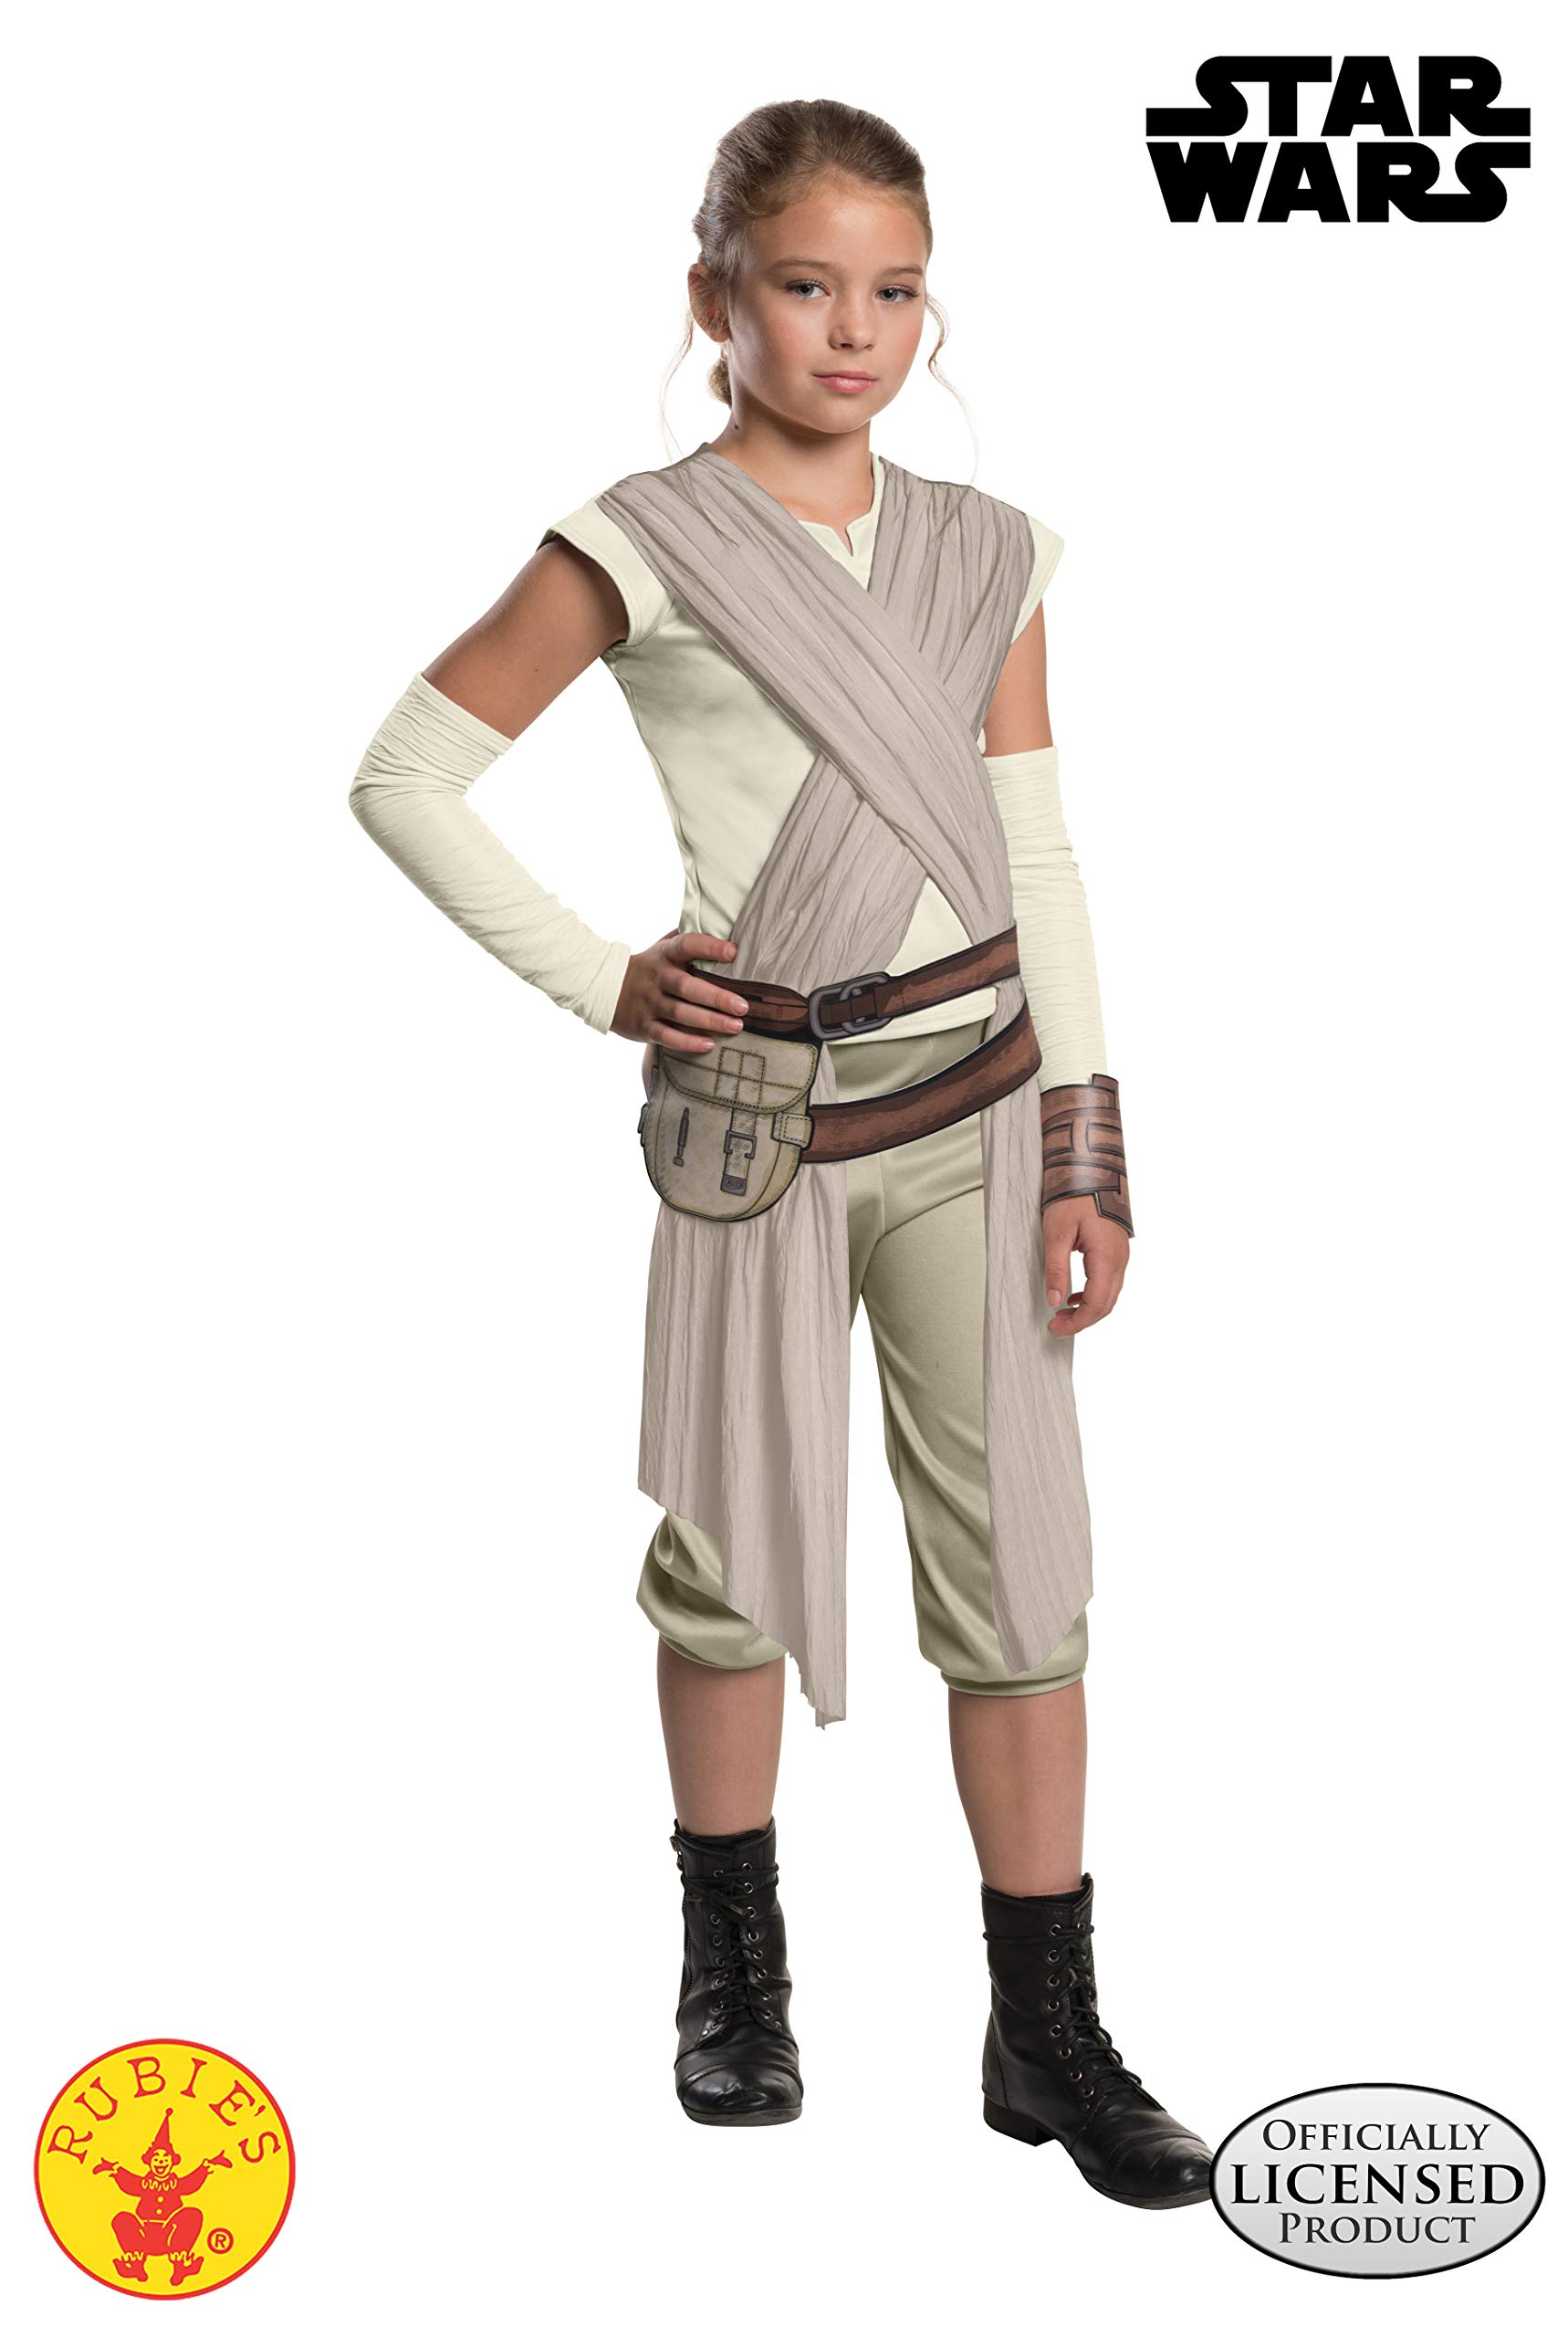 Star Wars: The Force Awakens Child's Deluxe Rey Costume, Medium